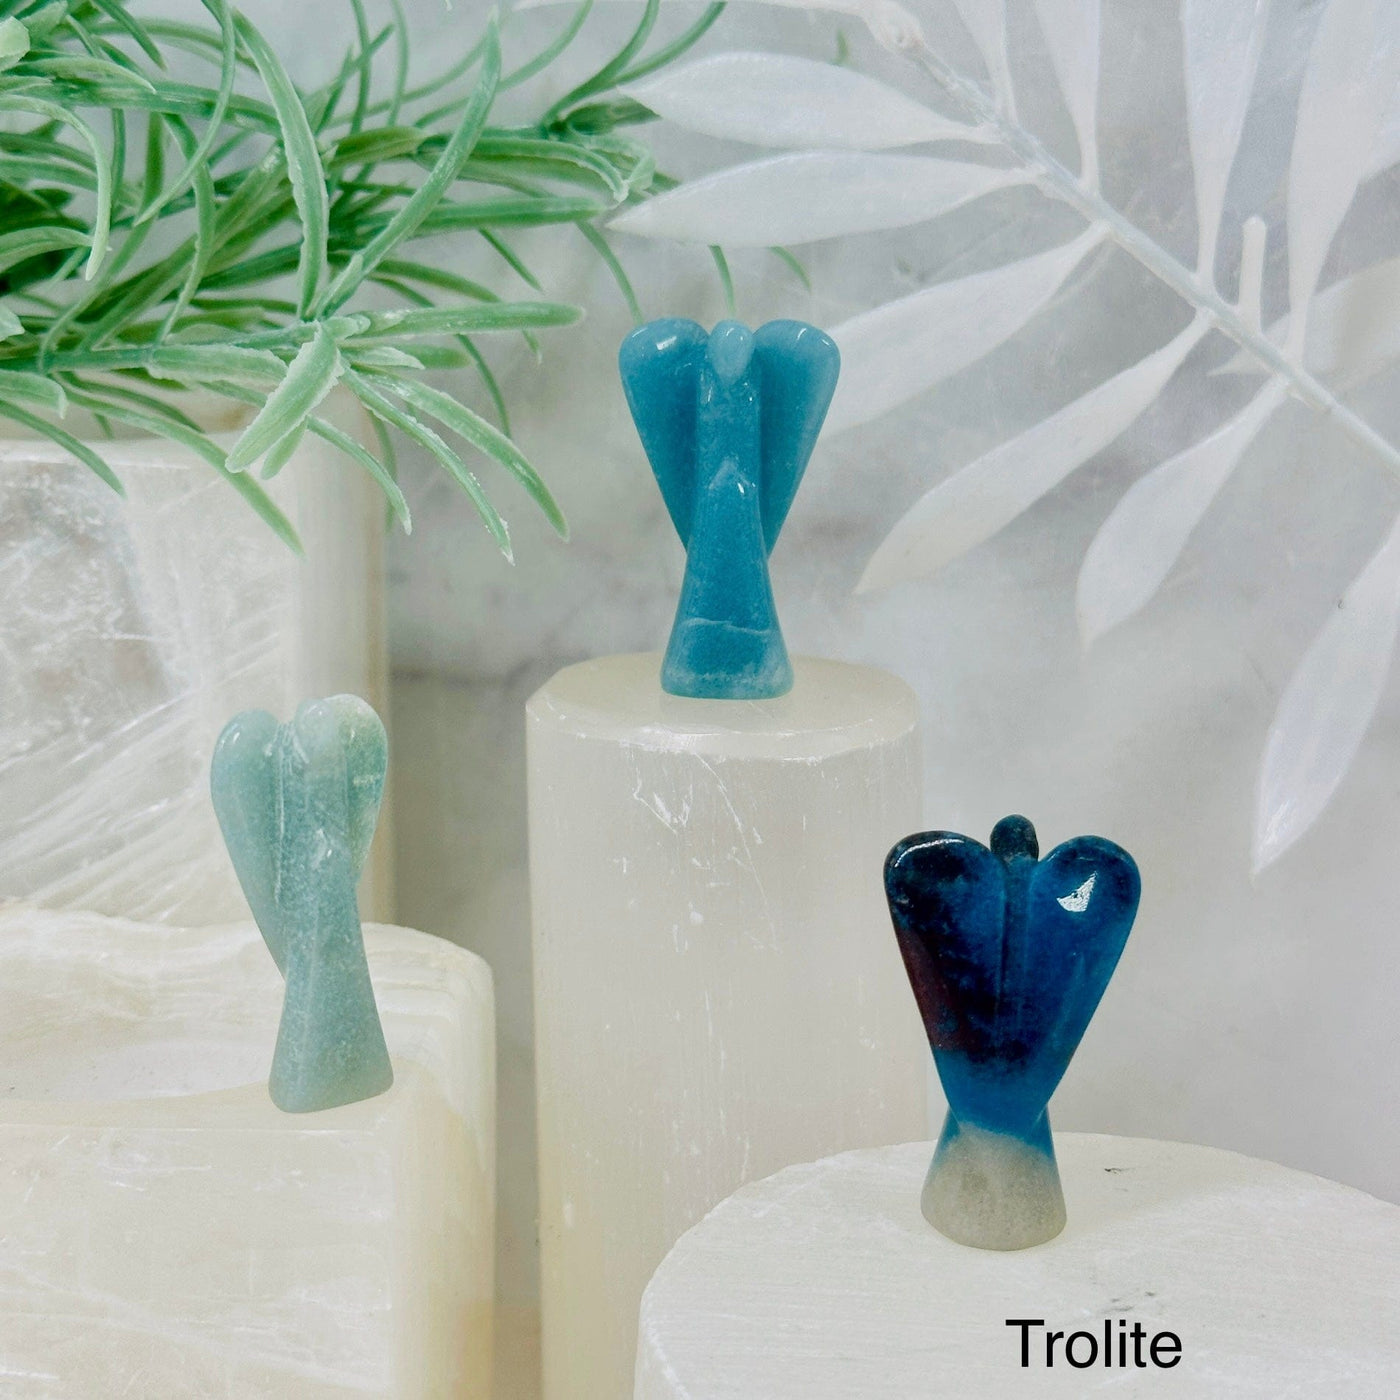 Gemstone Angels - Medium 3 trolite angels on pedestals at different angles labeled